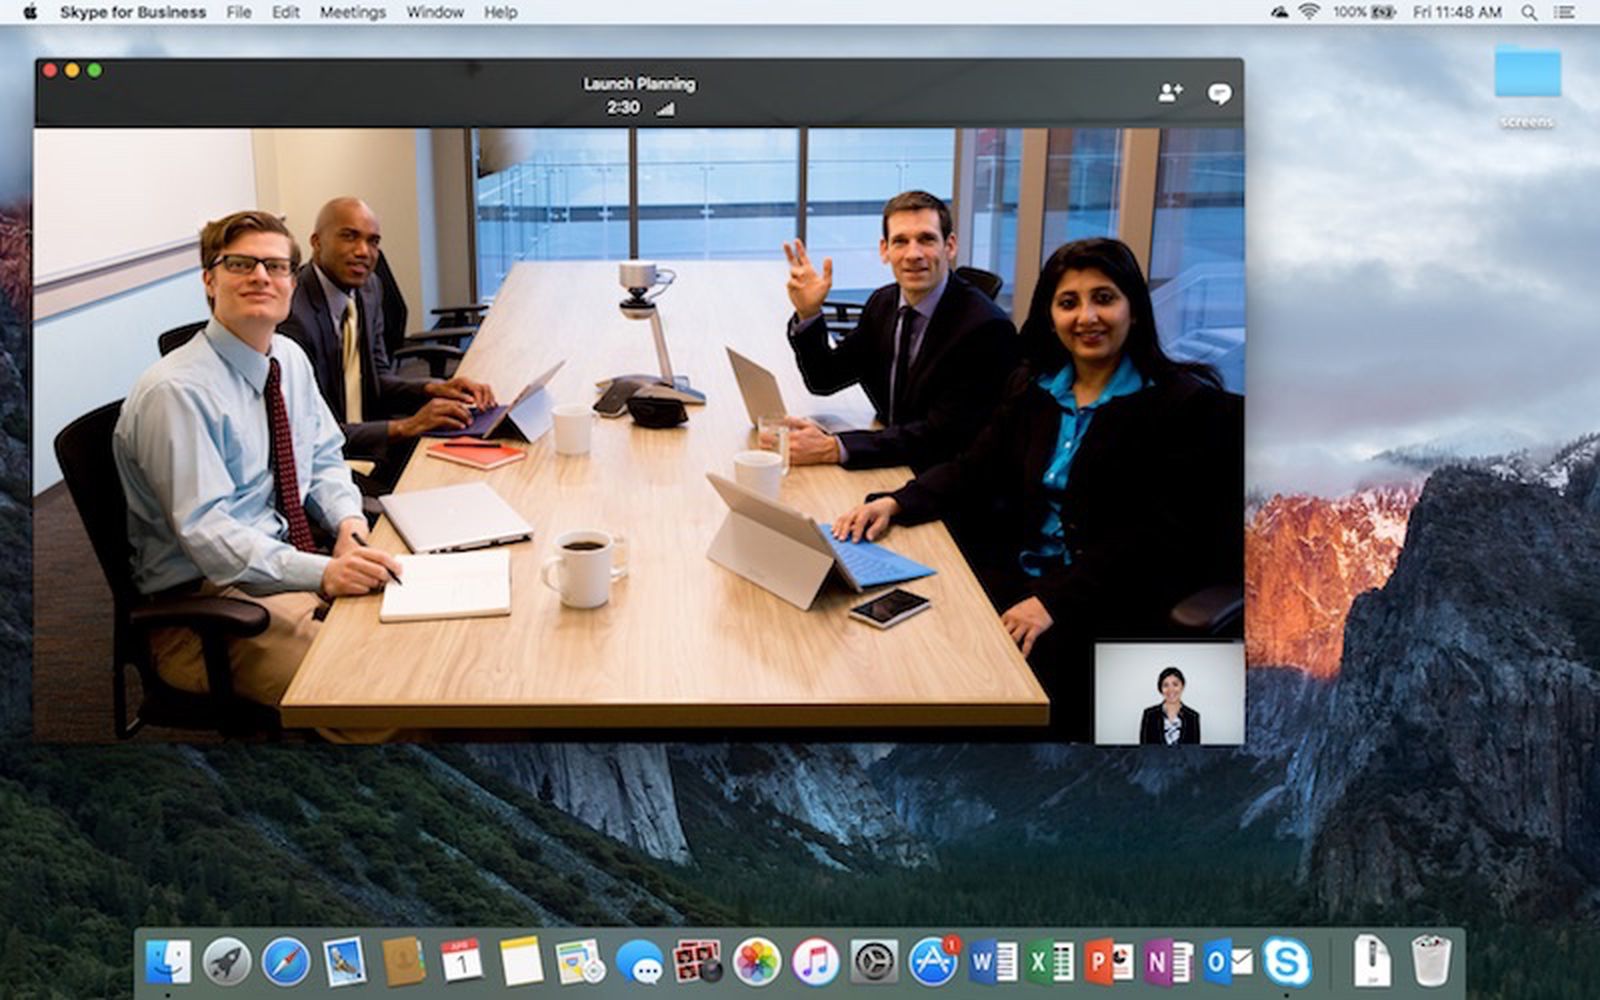 skype for business mac send meeting url